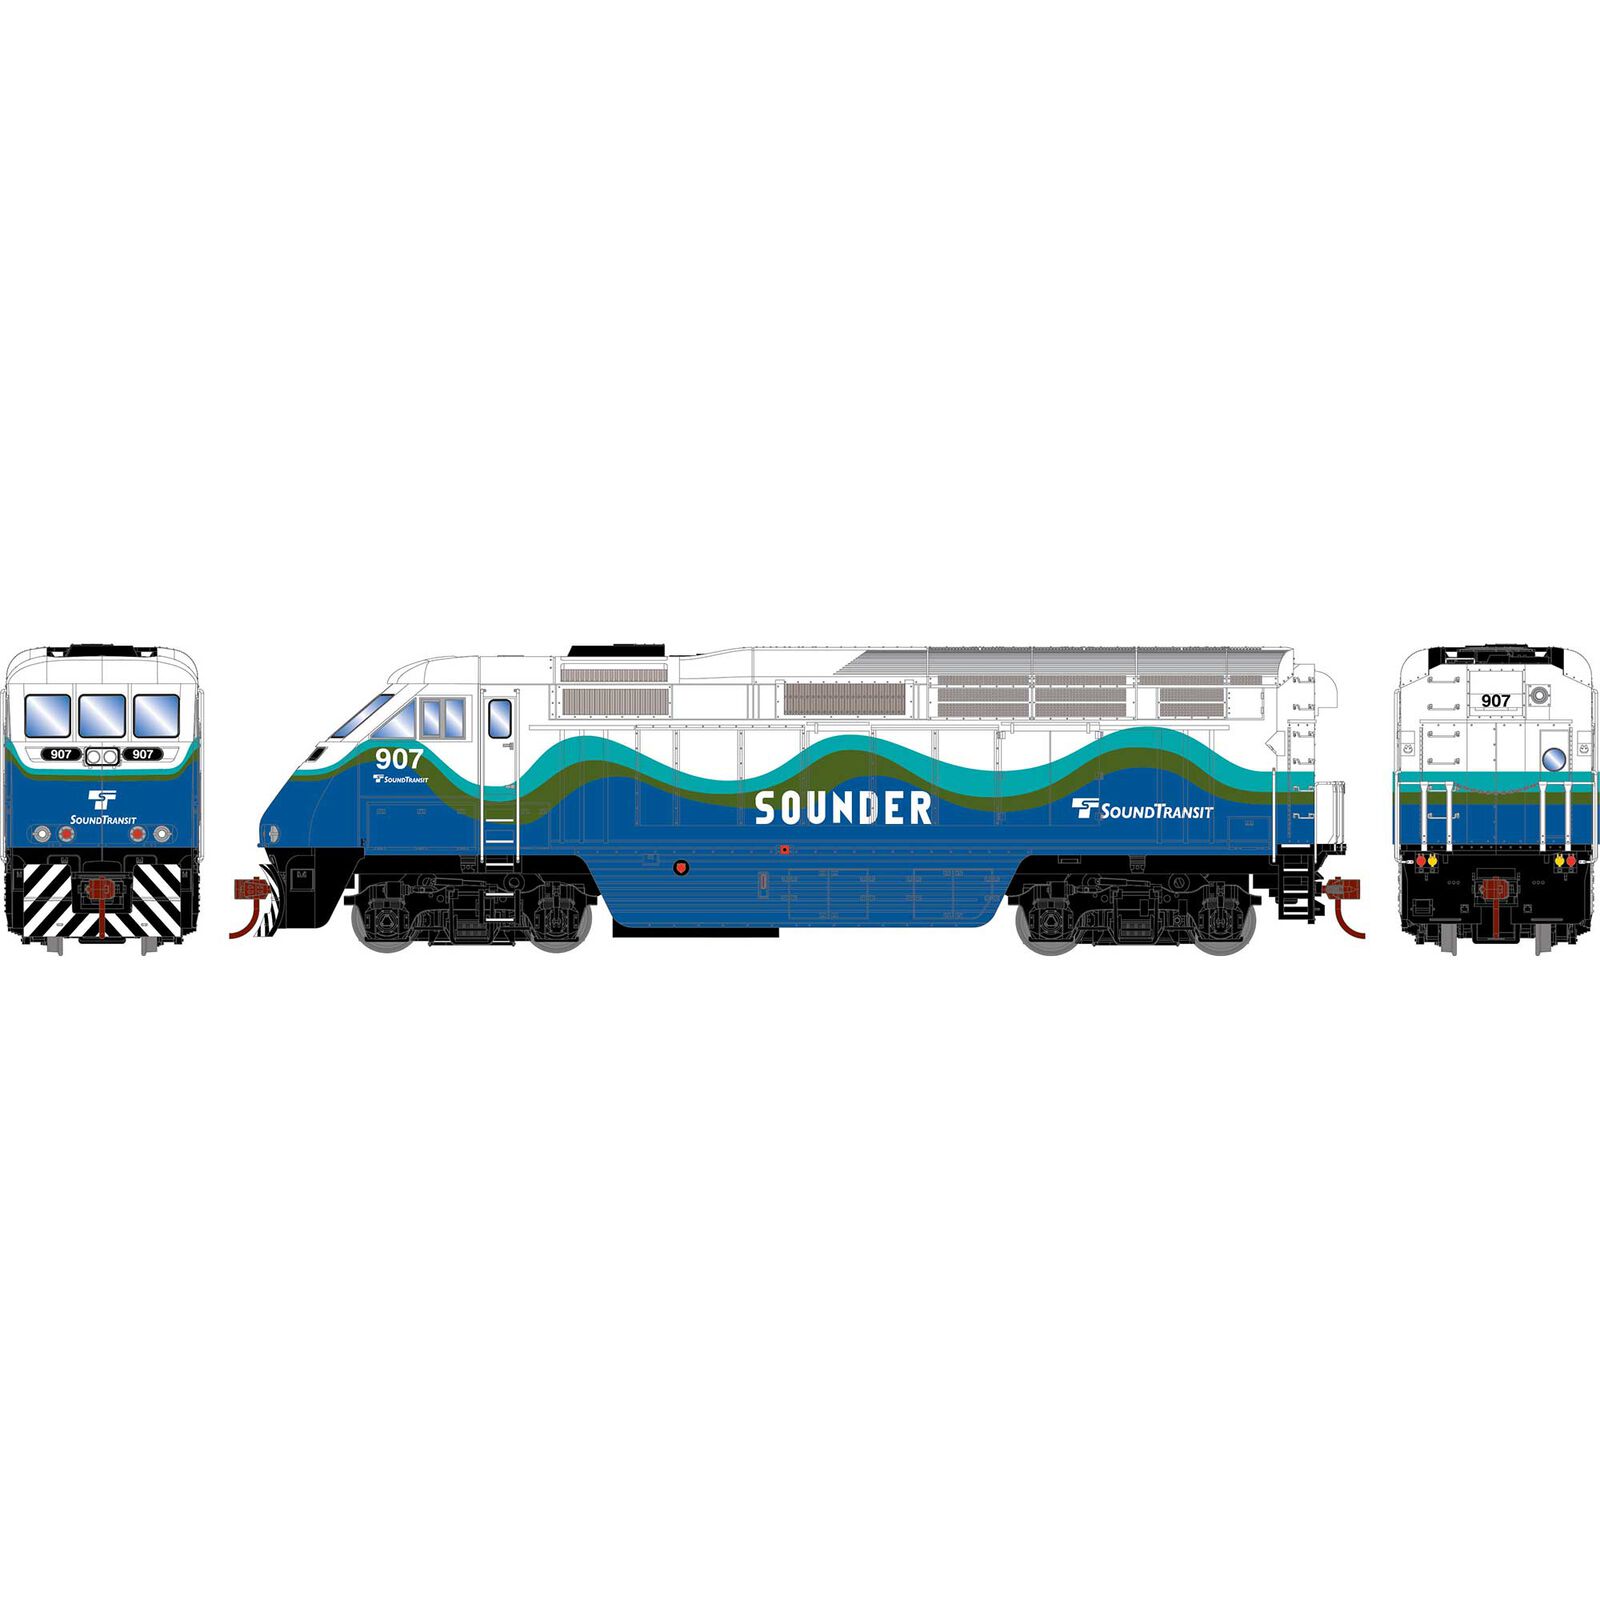 HO F59PHI Locomotive with DCC & Sound, SDRX #907